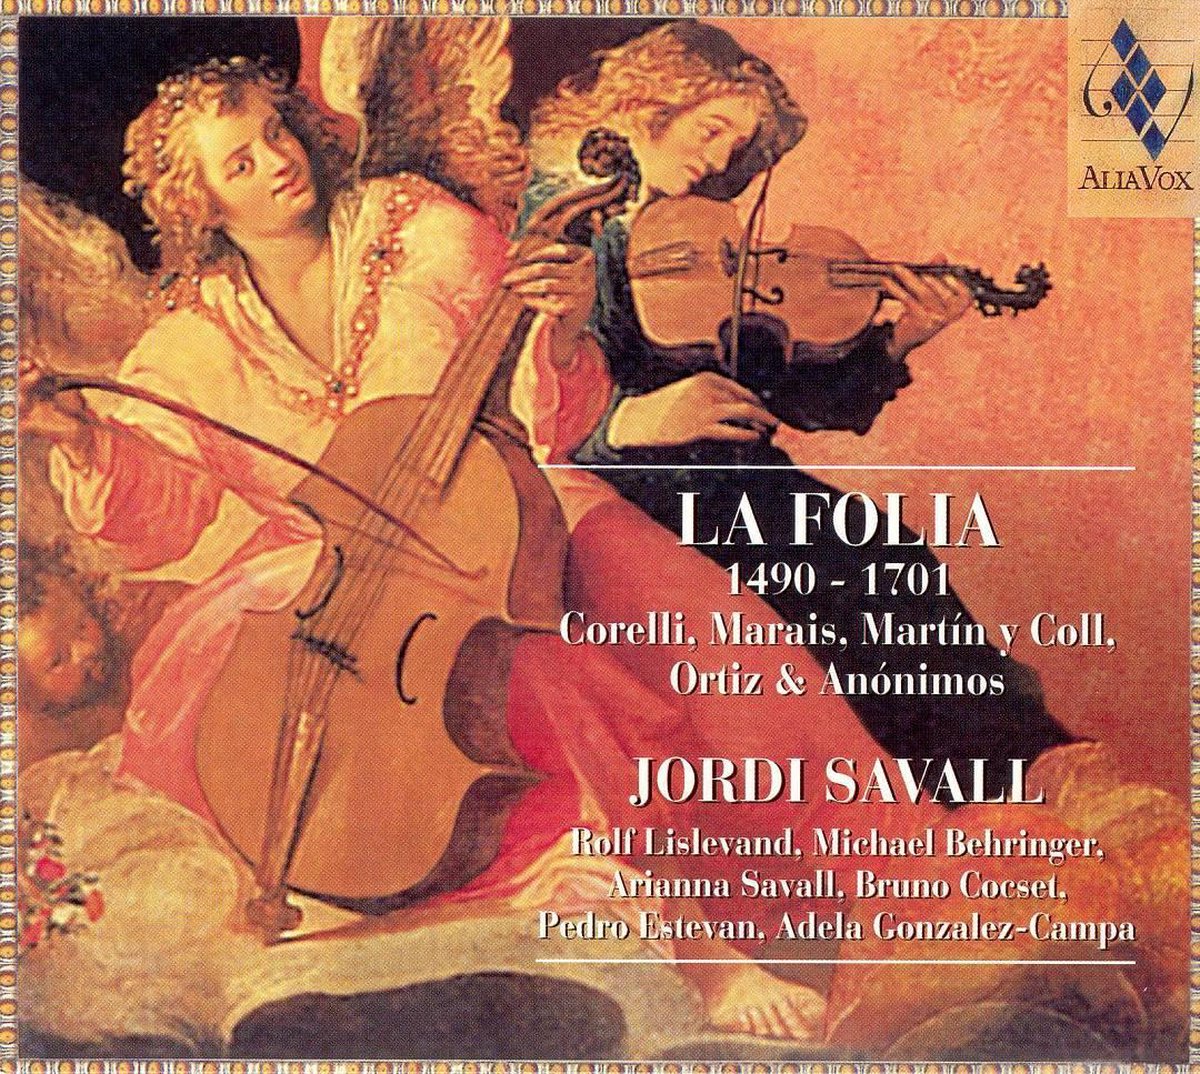 La Folia - Corelli, Marais, et al / Savall, Lislevand, et al - Jordi Savall